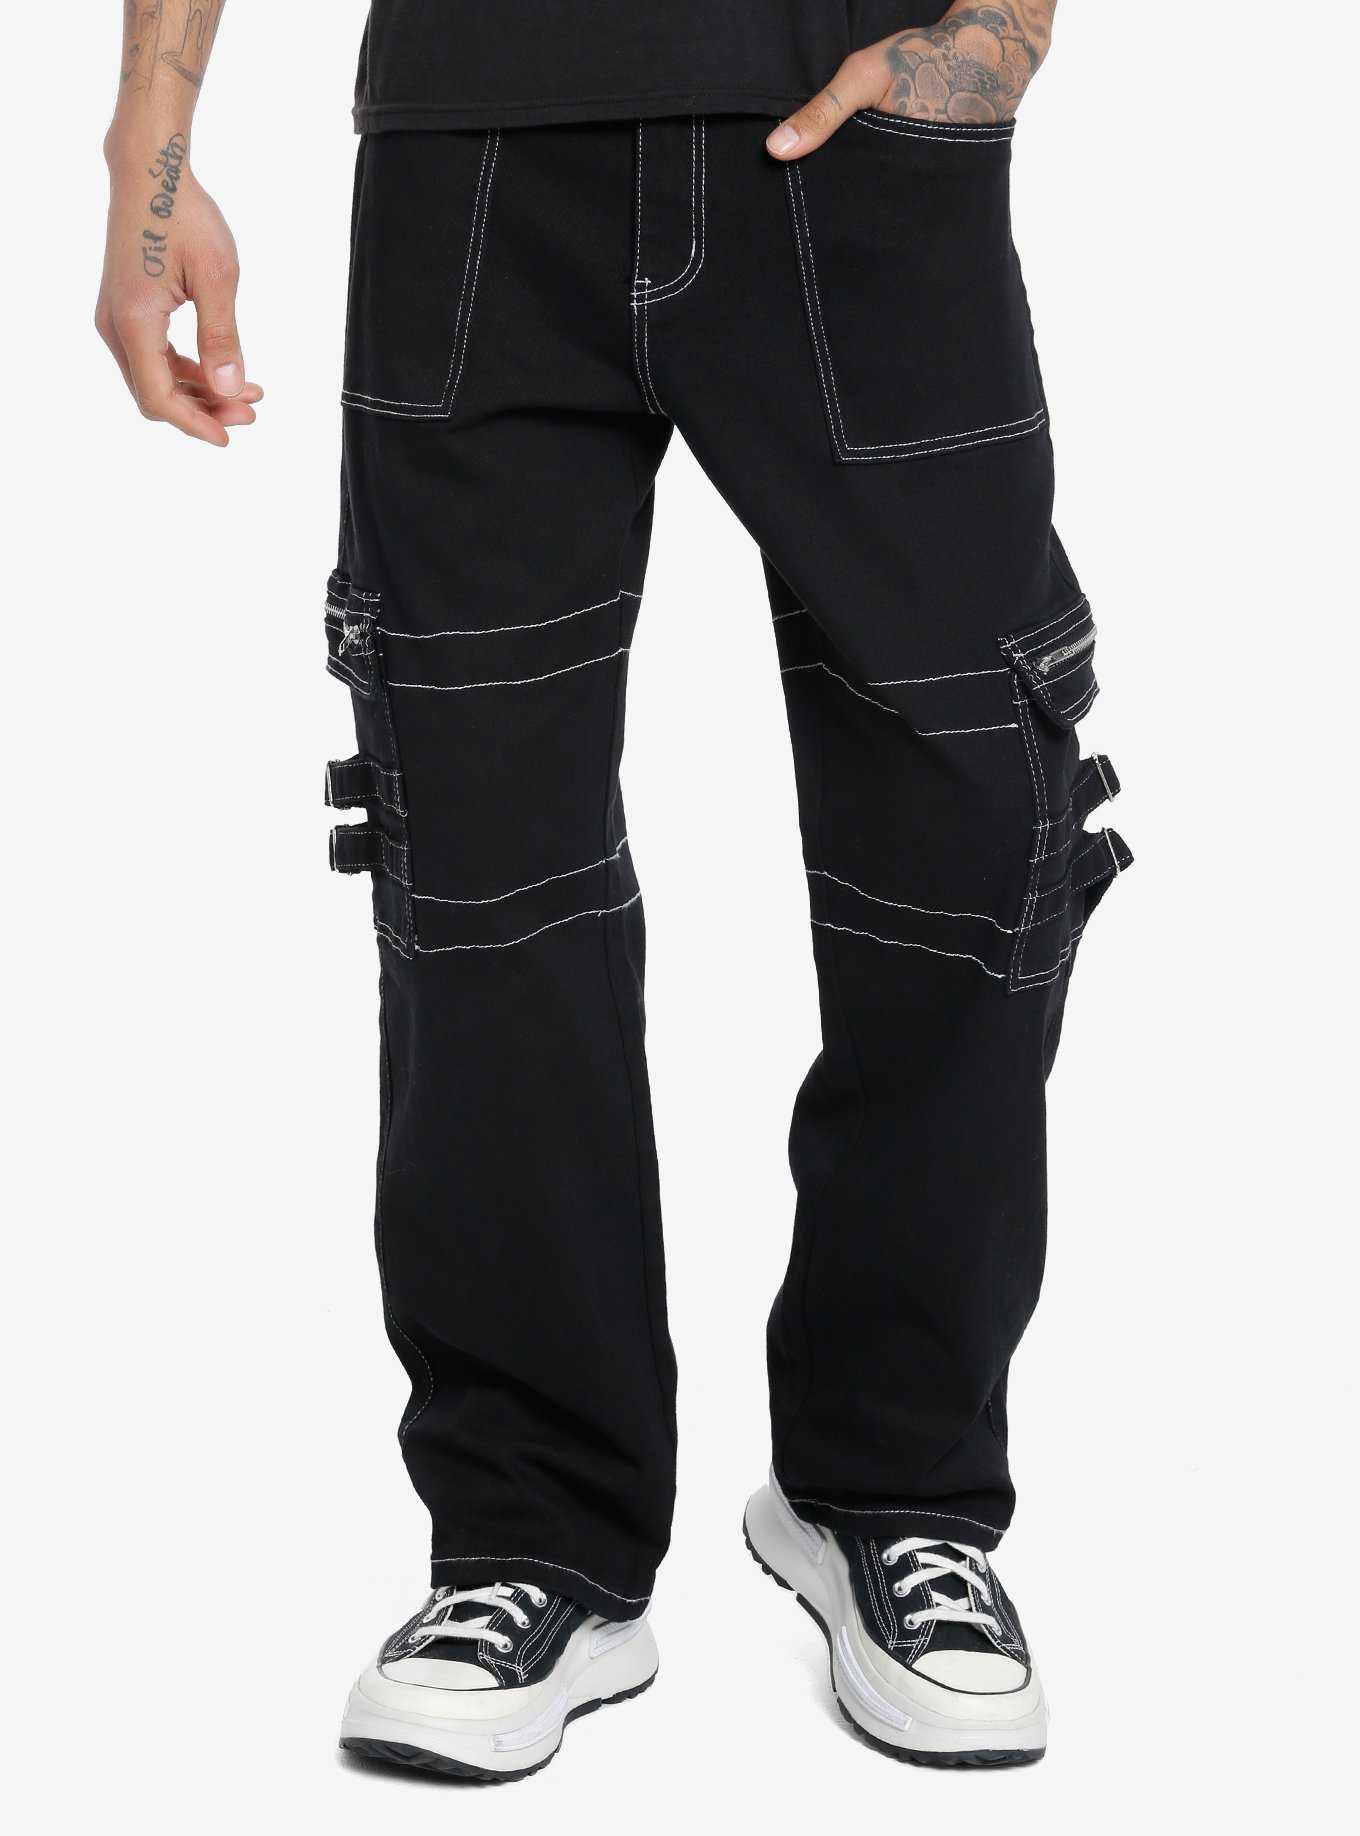 Hot Topic Black & White Plaid Grommet Pants